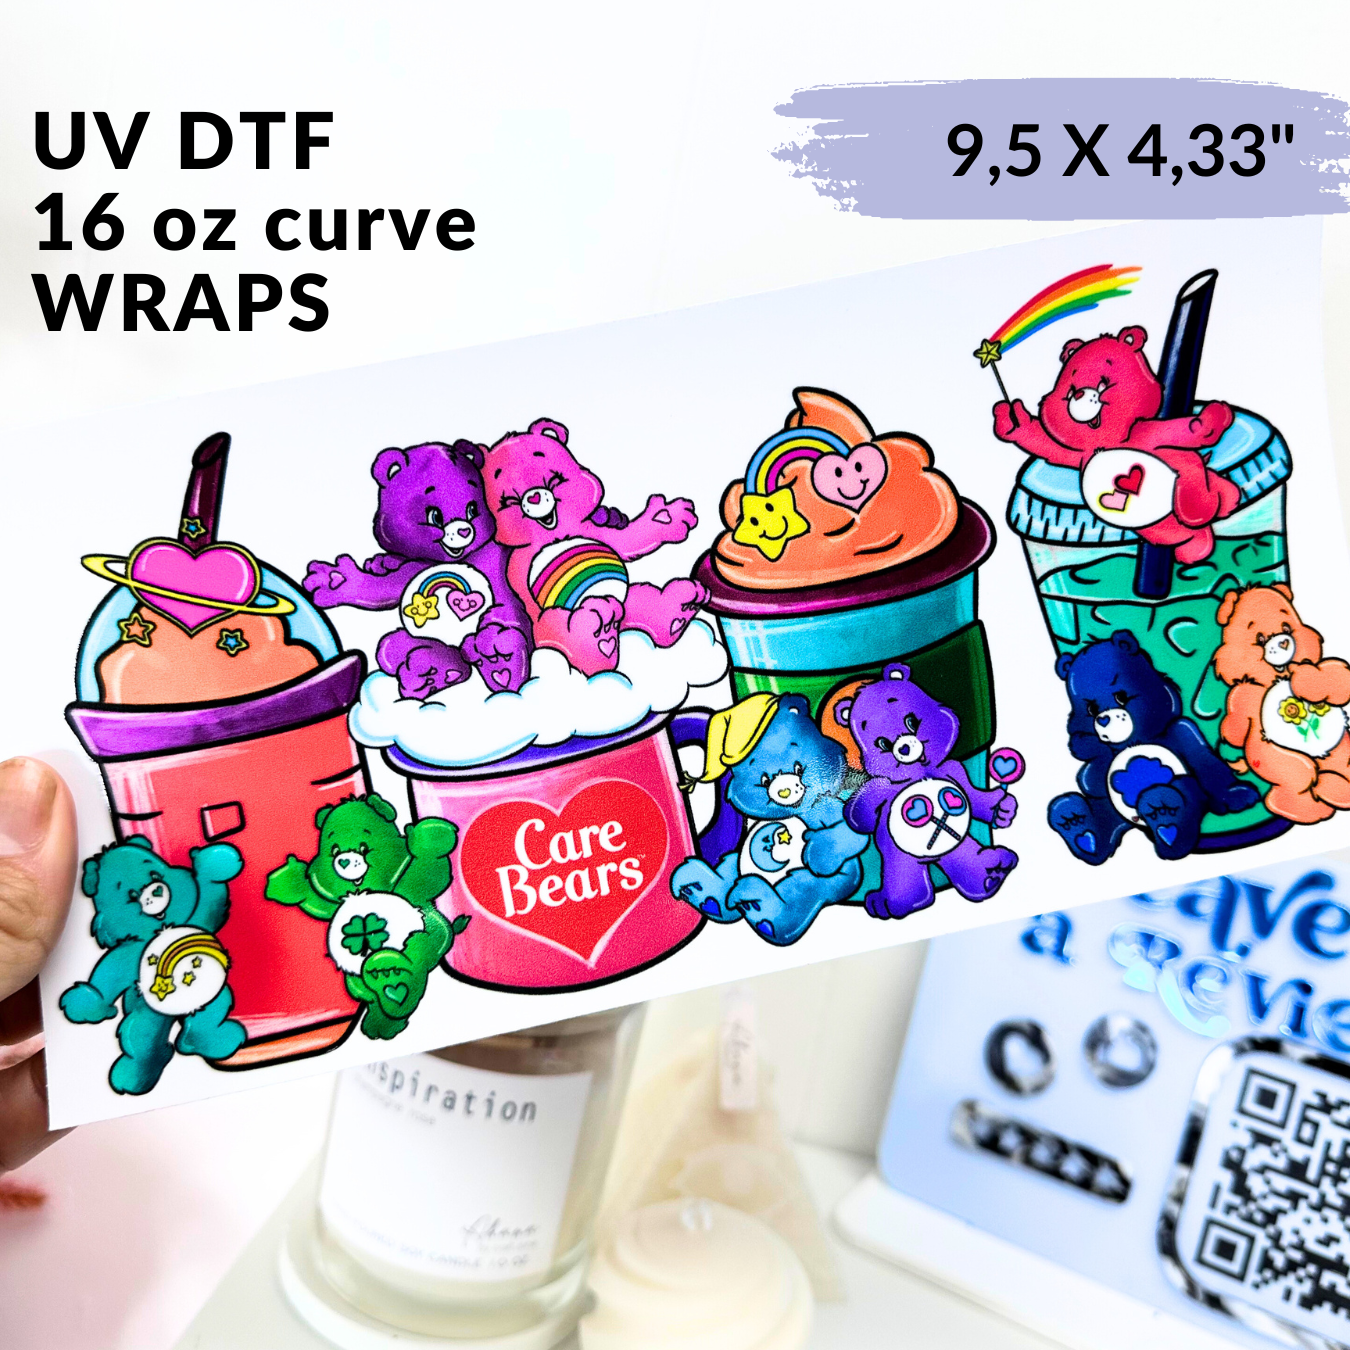 UV DTF Wrap - Color Bears Libbey cup Wrap